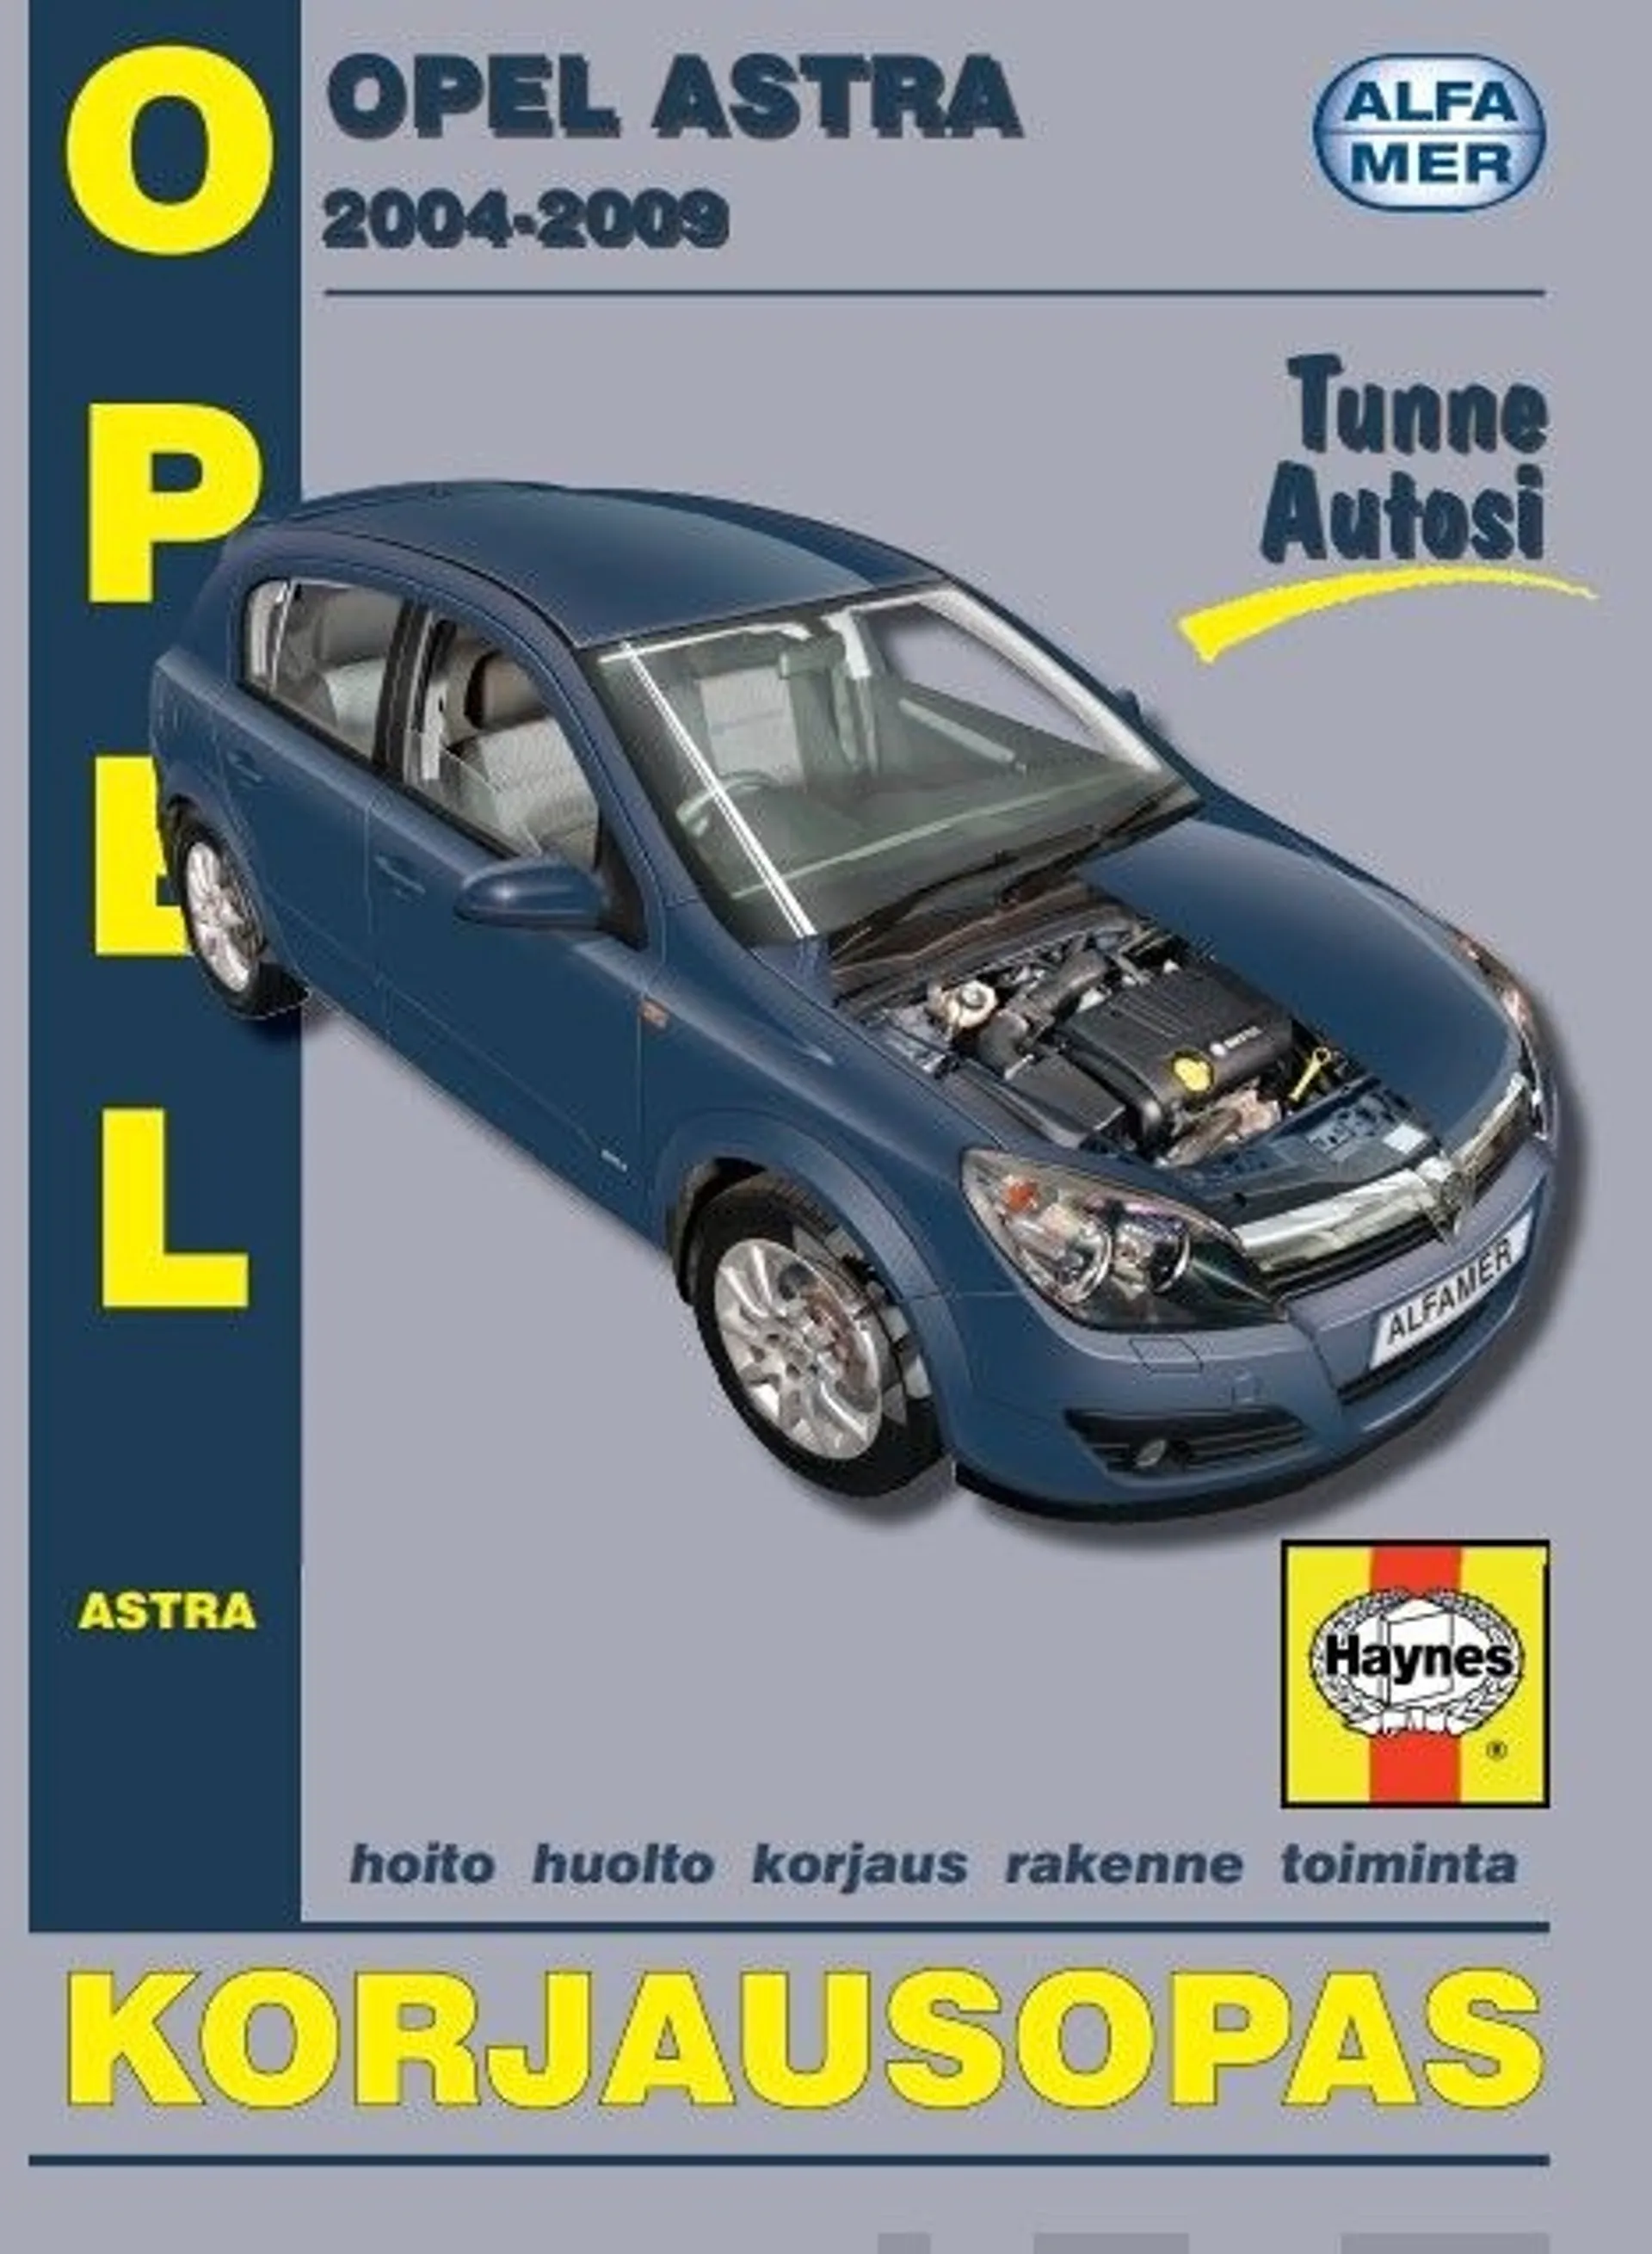 Mauno, Opel Astra 2004-2009